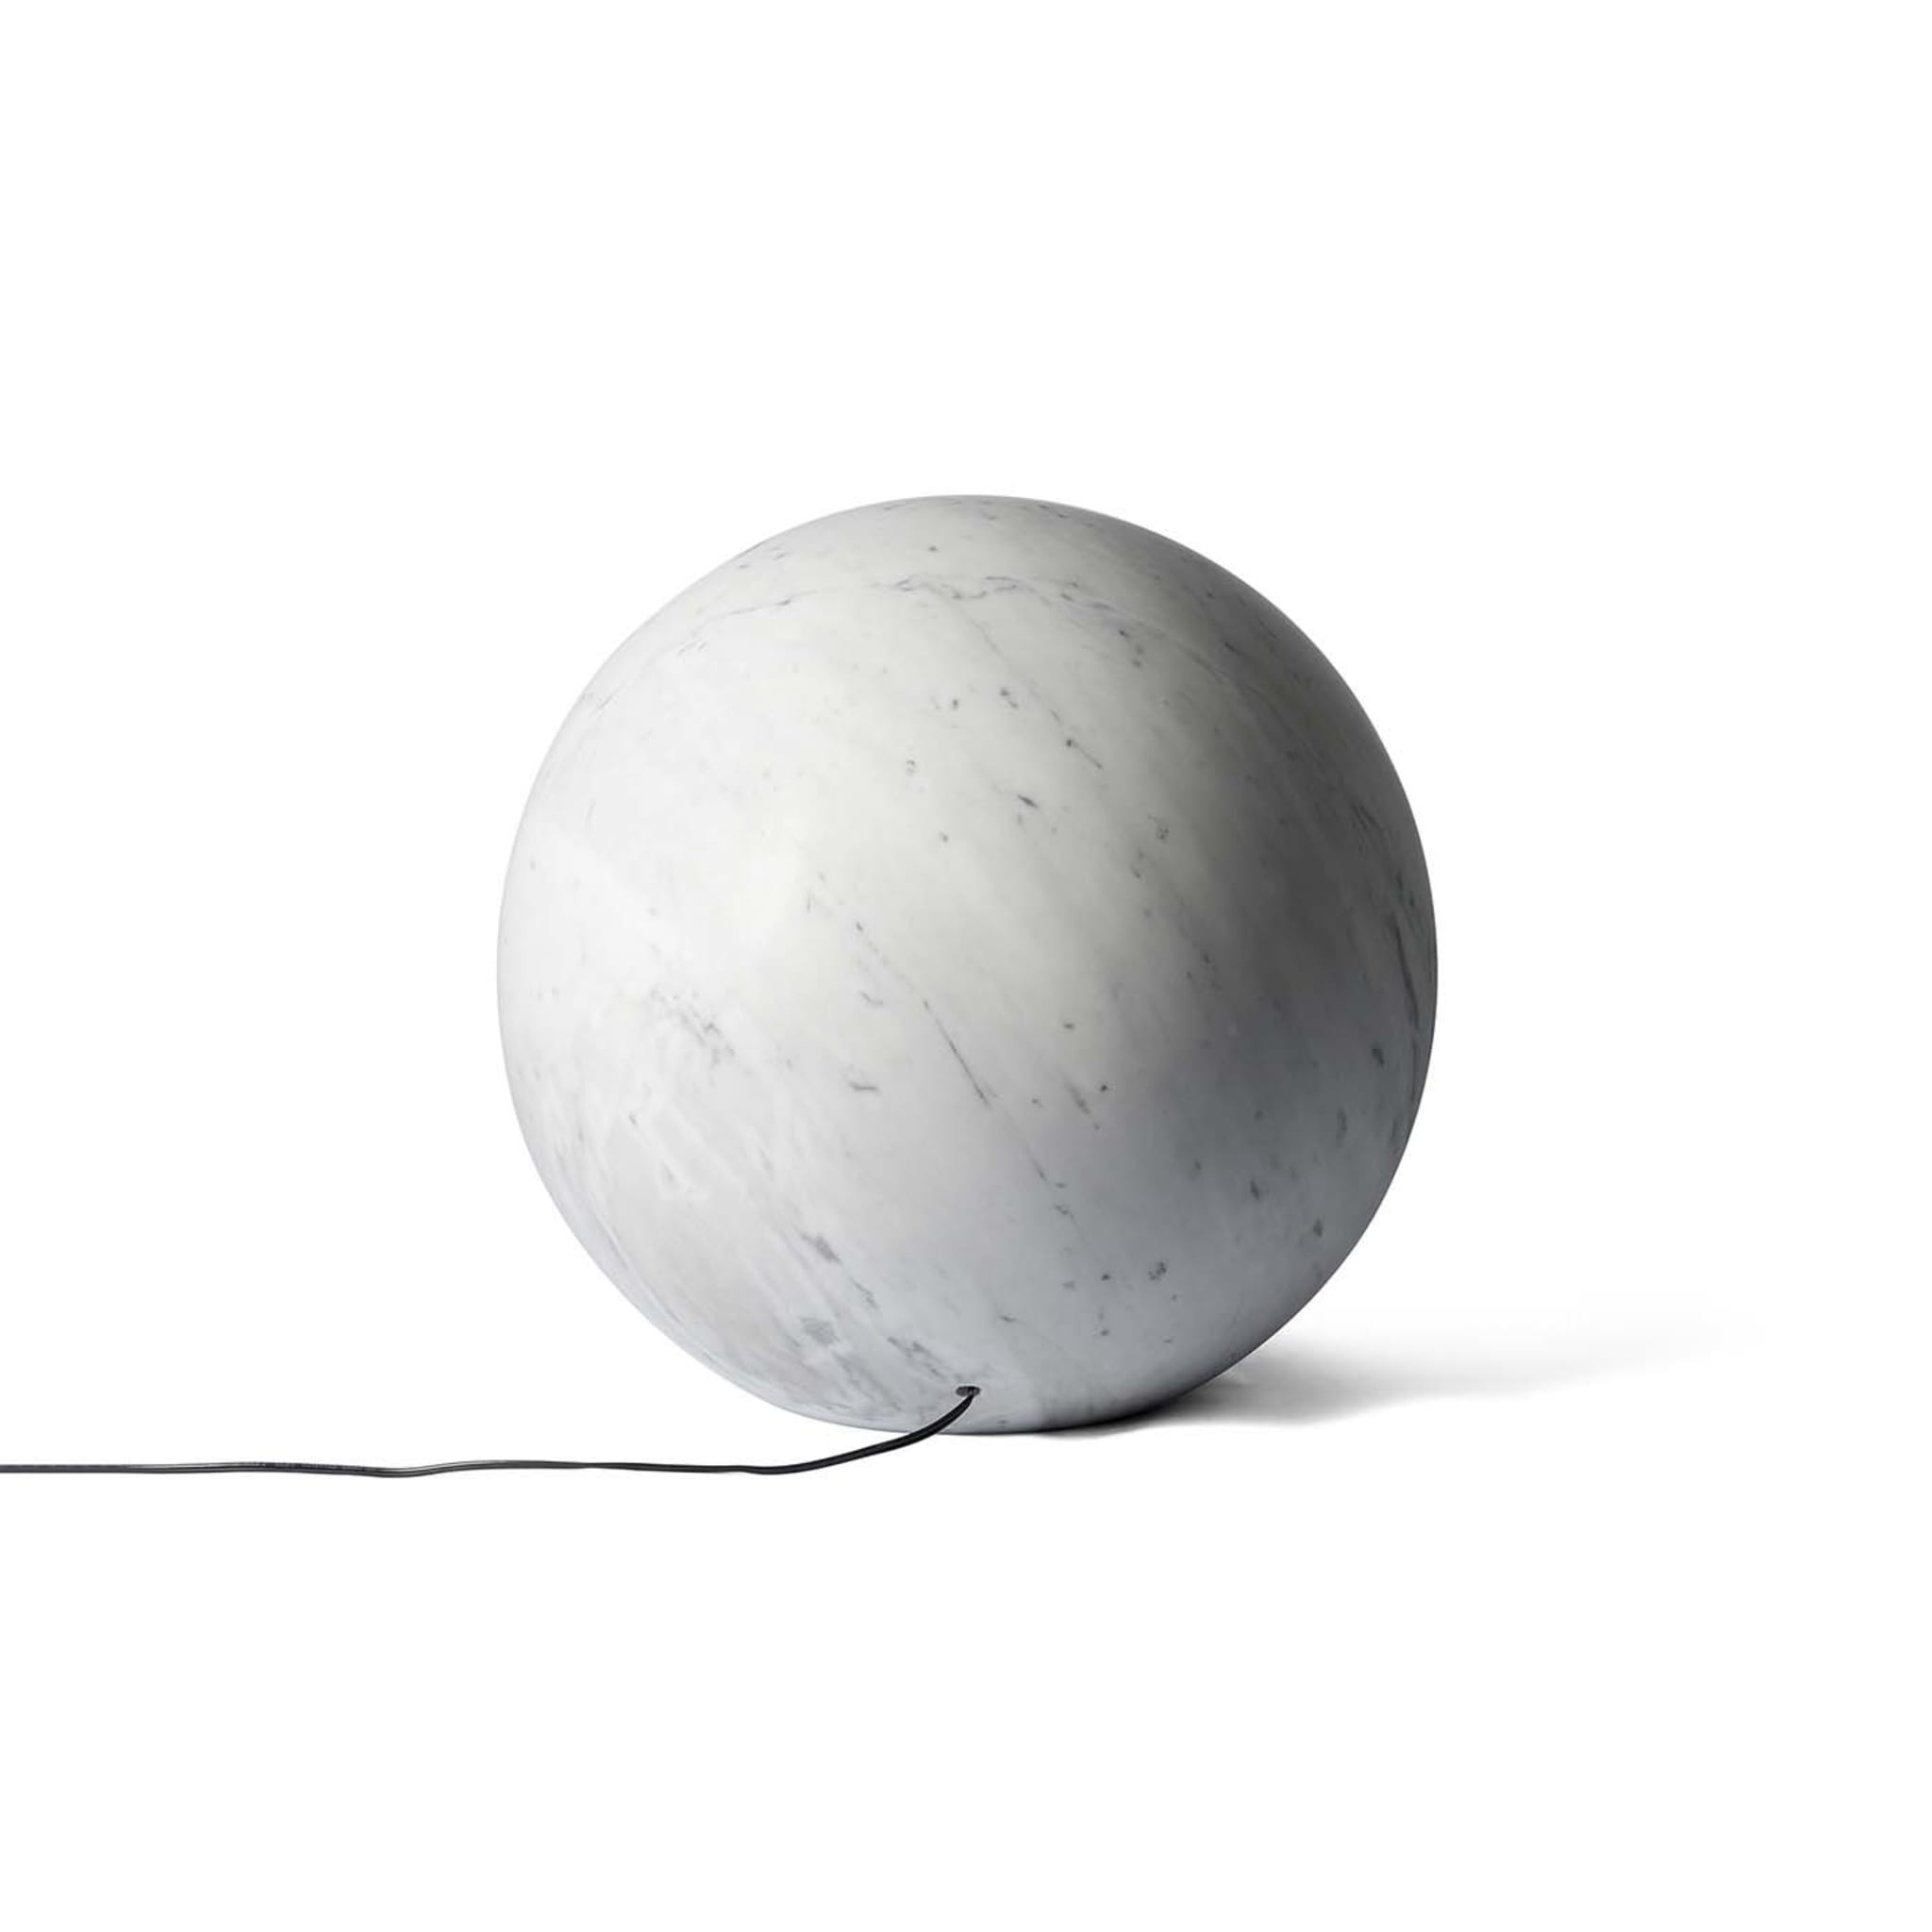 Urano 50 Floor Lamp by Elisa Ossino - Alternative view 1